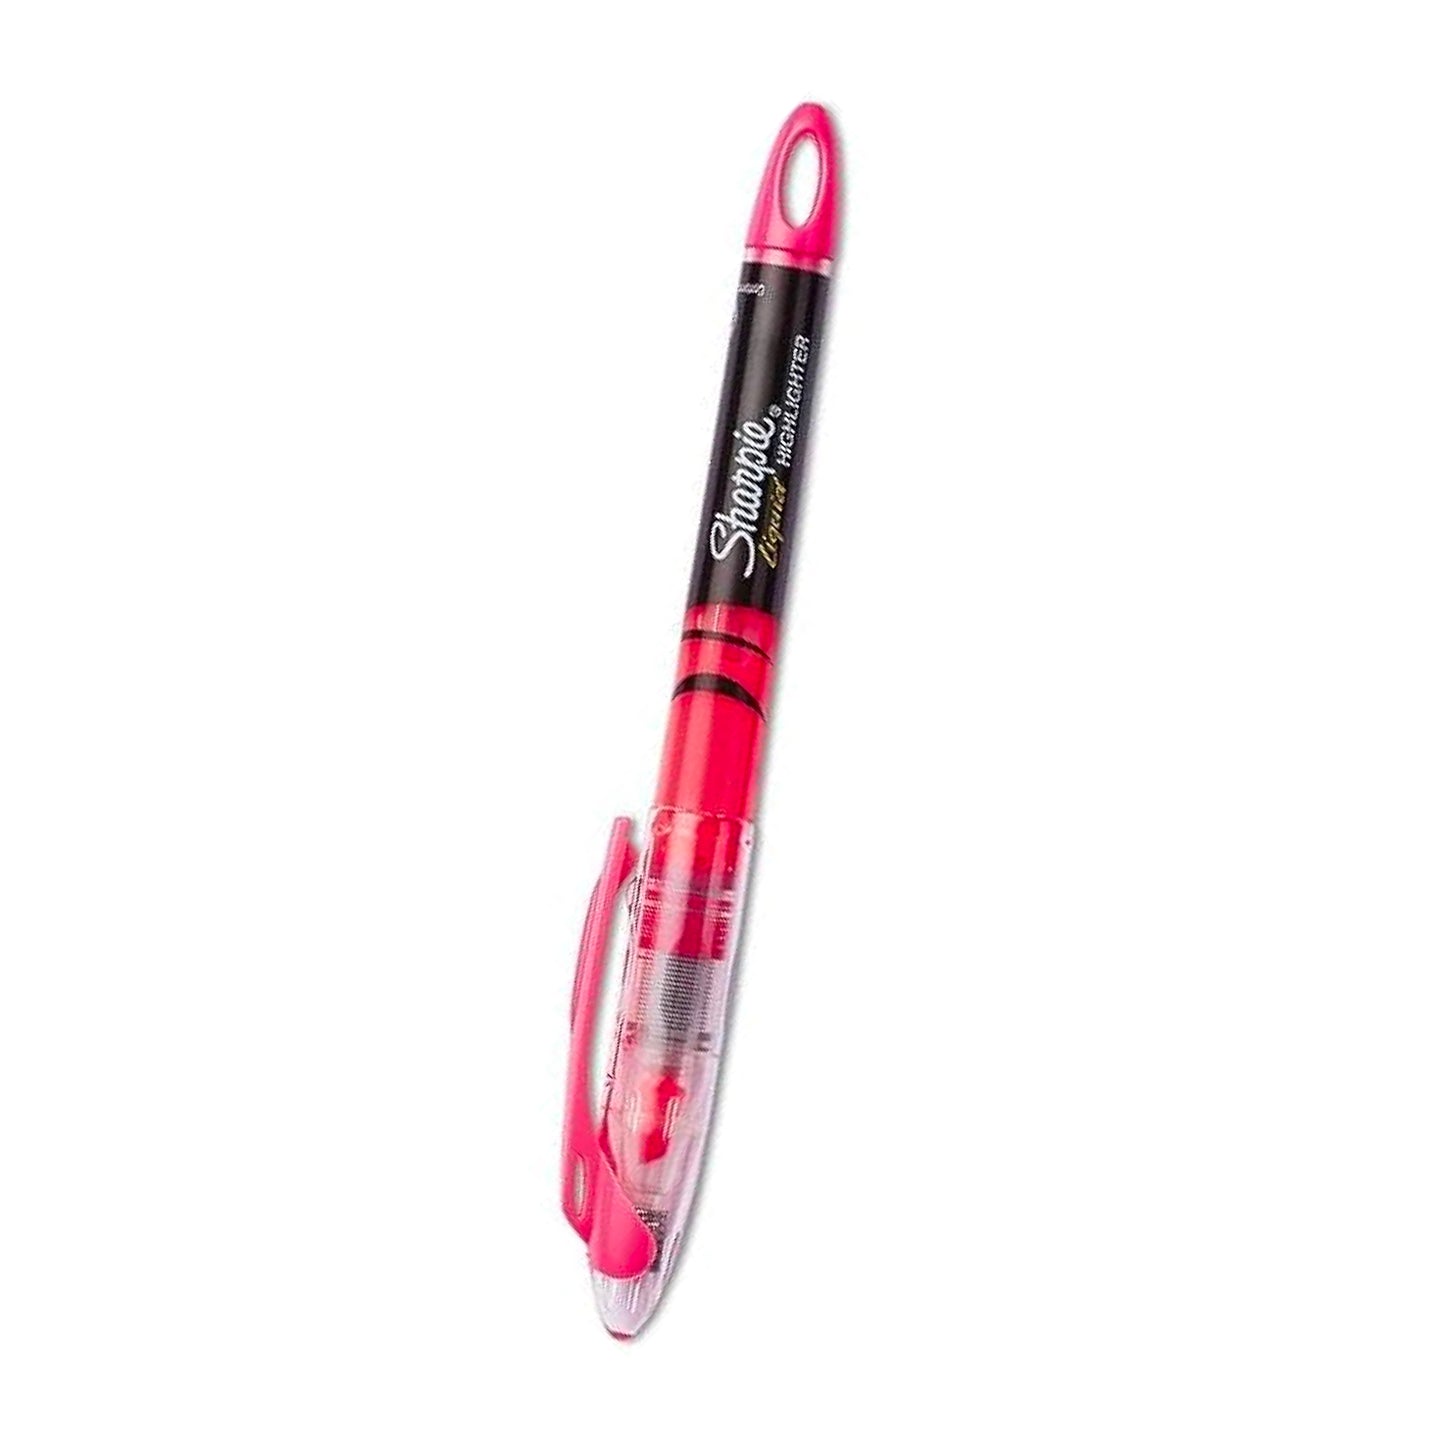 Sharpie "Accent" Liquid Pen Style Highlighter